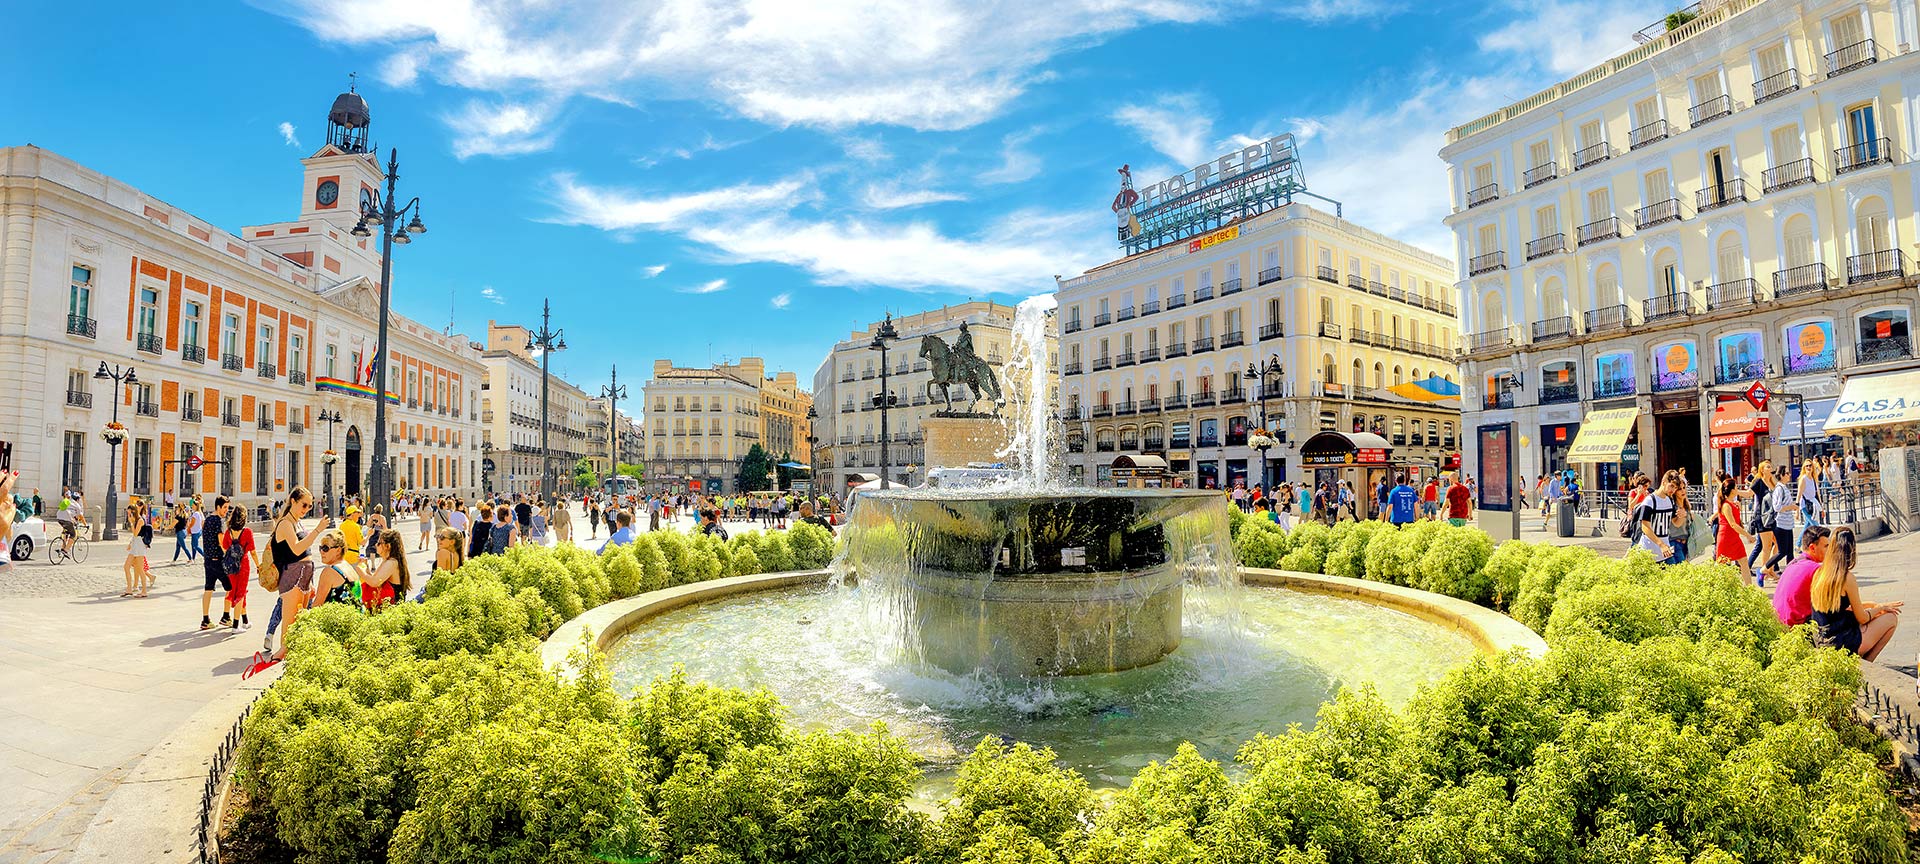 Puerta del Sol (Madrid) Madrid | spain.info